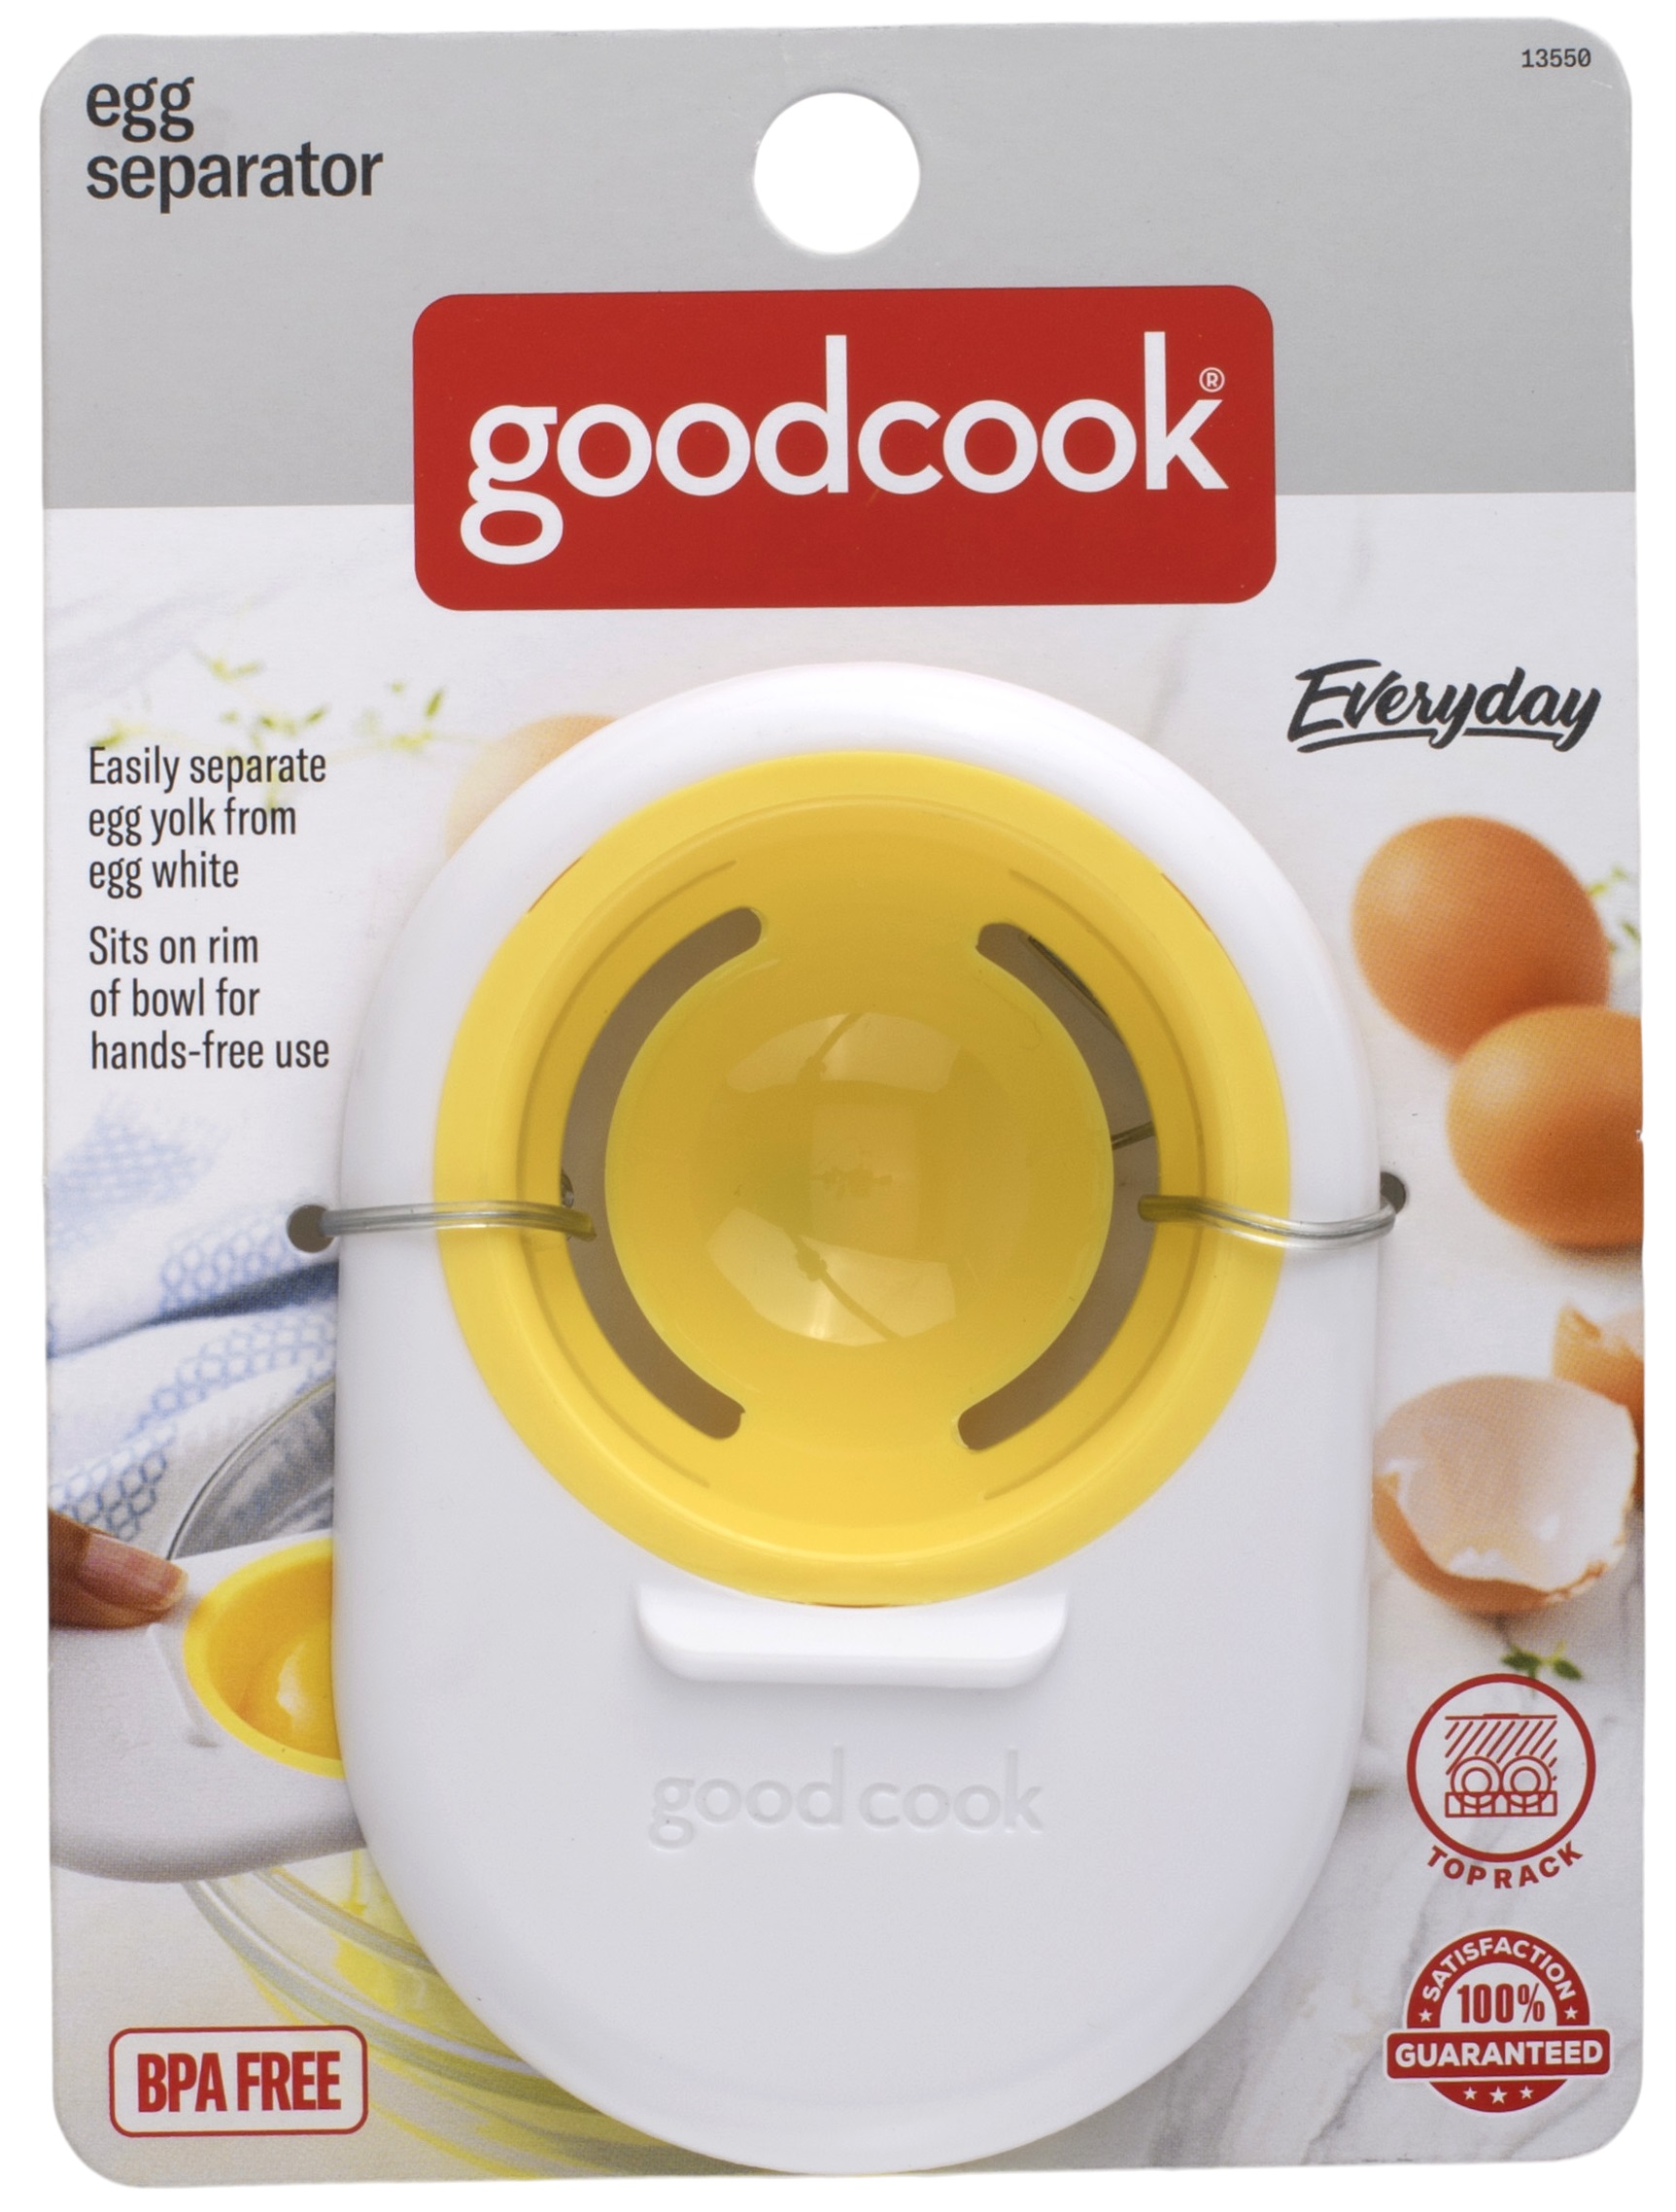 13550_GoodCook_Everyday_Egg Separator_Packaging 1.psd